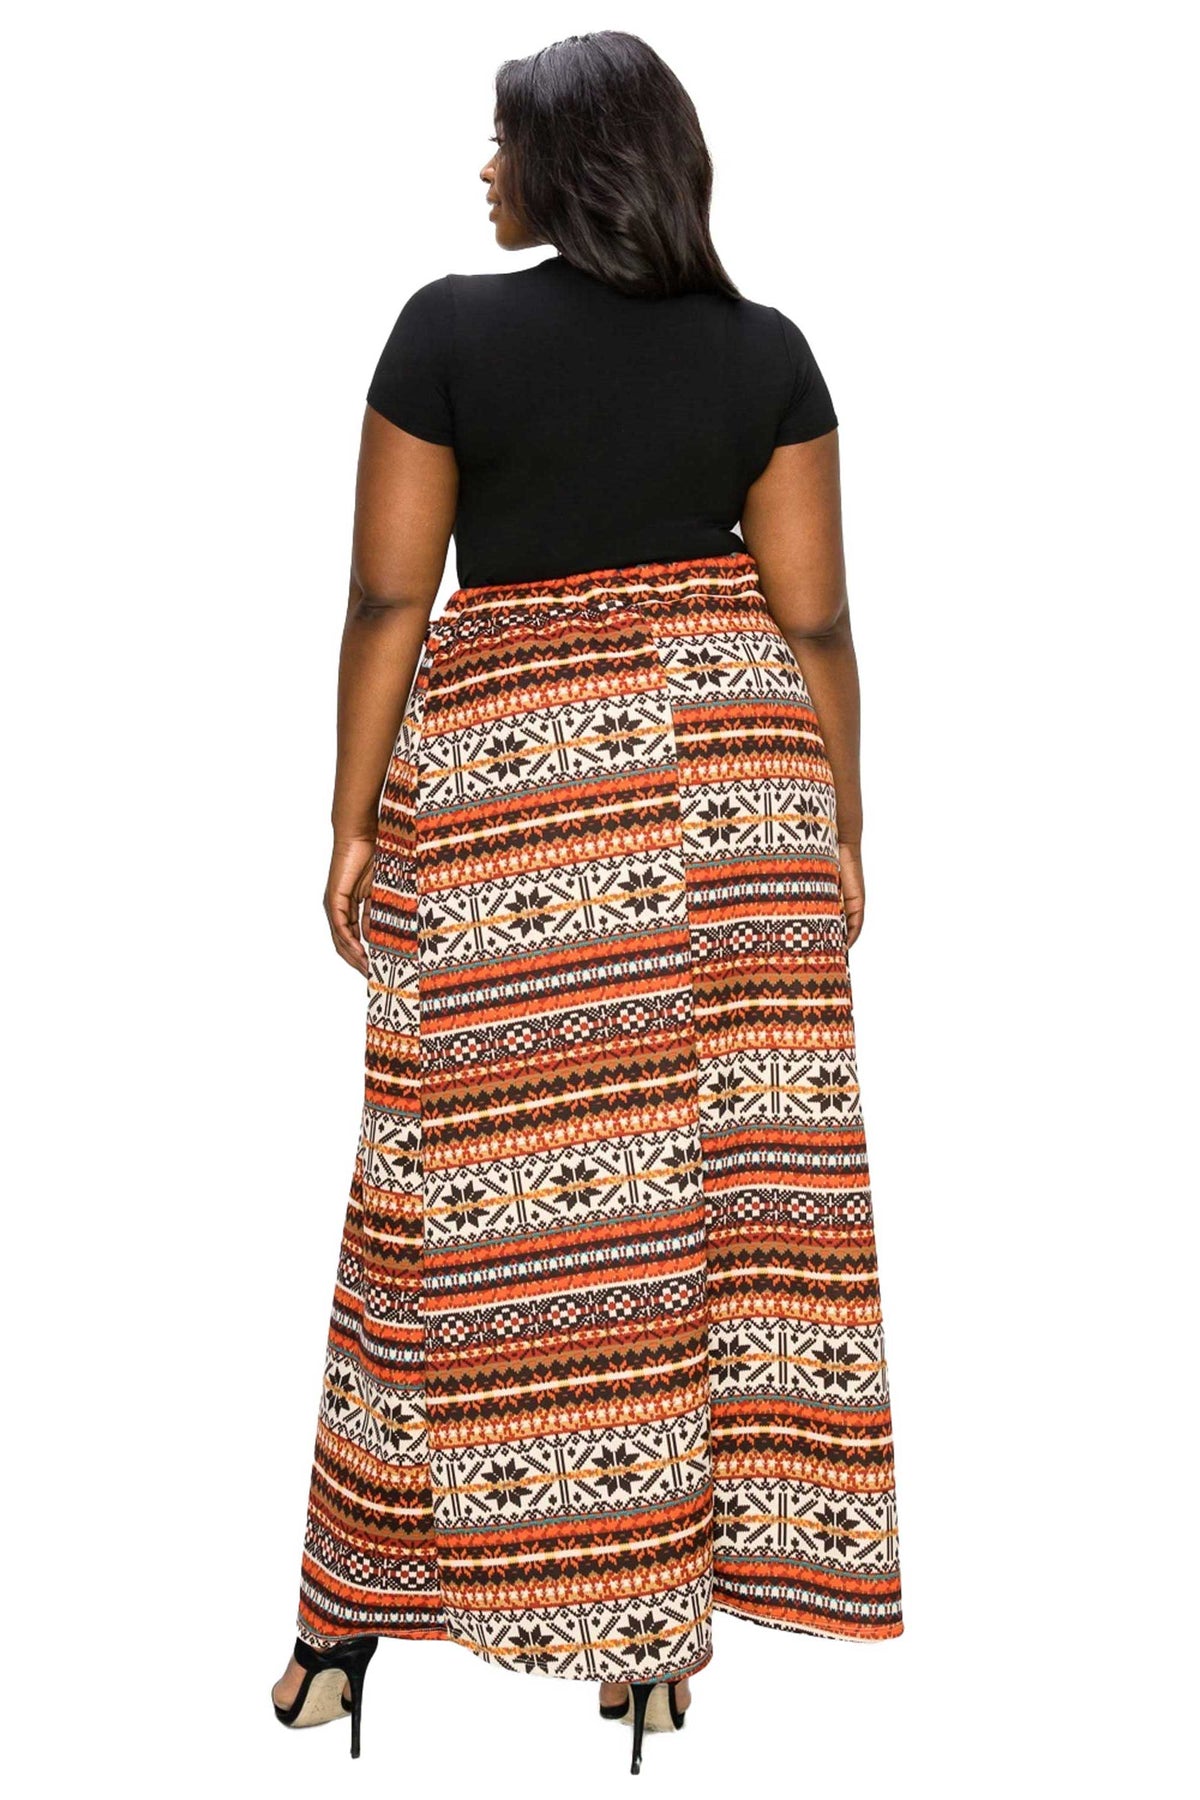 Tribal Wrap Maxi Skirt - L I V D